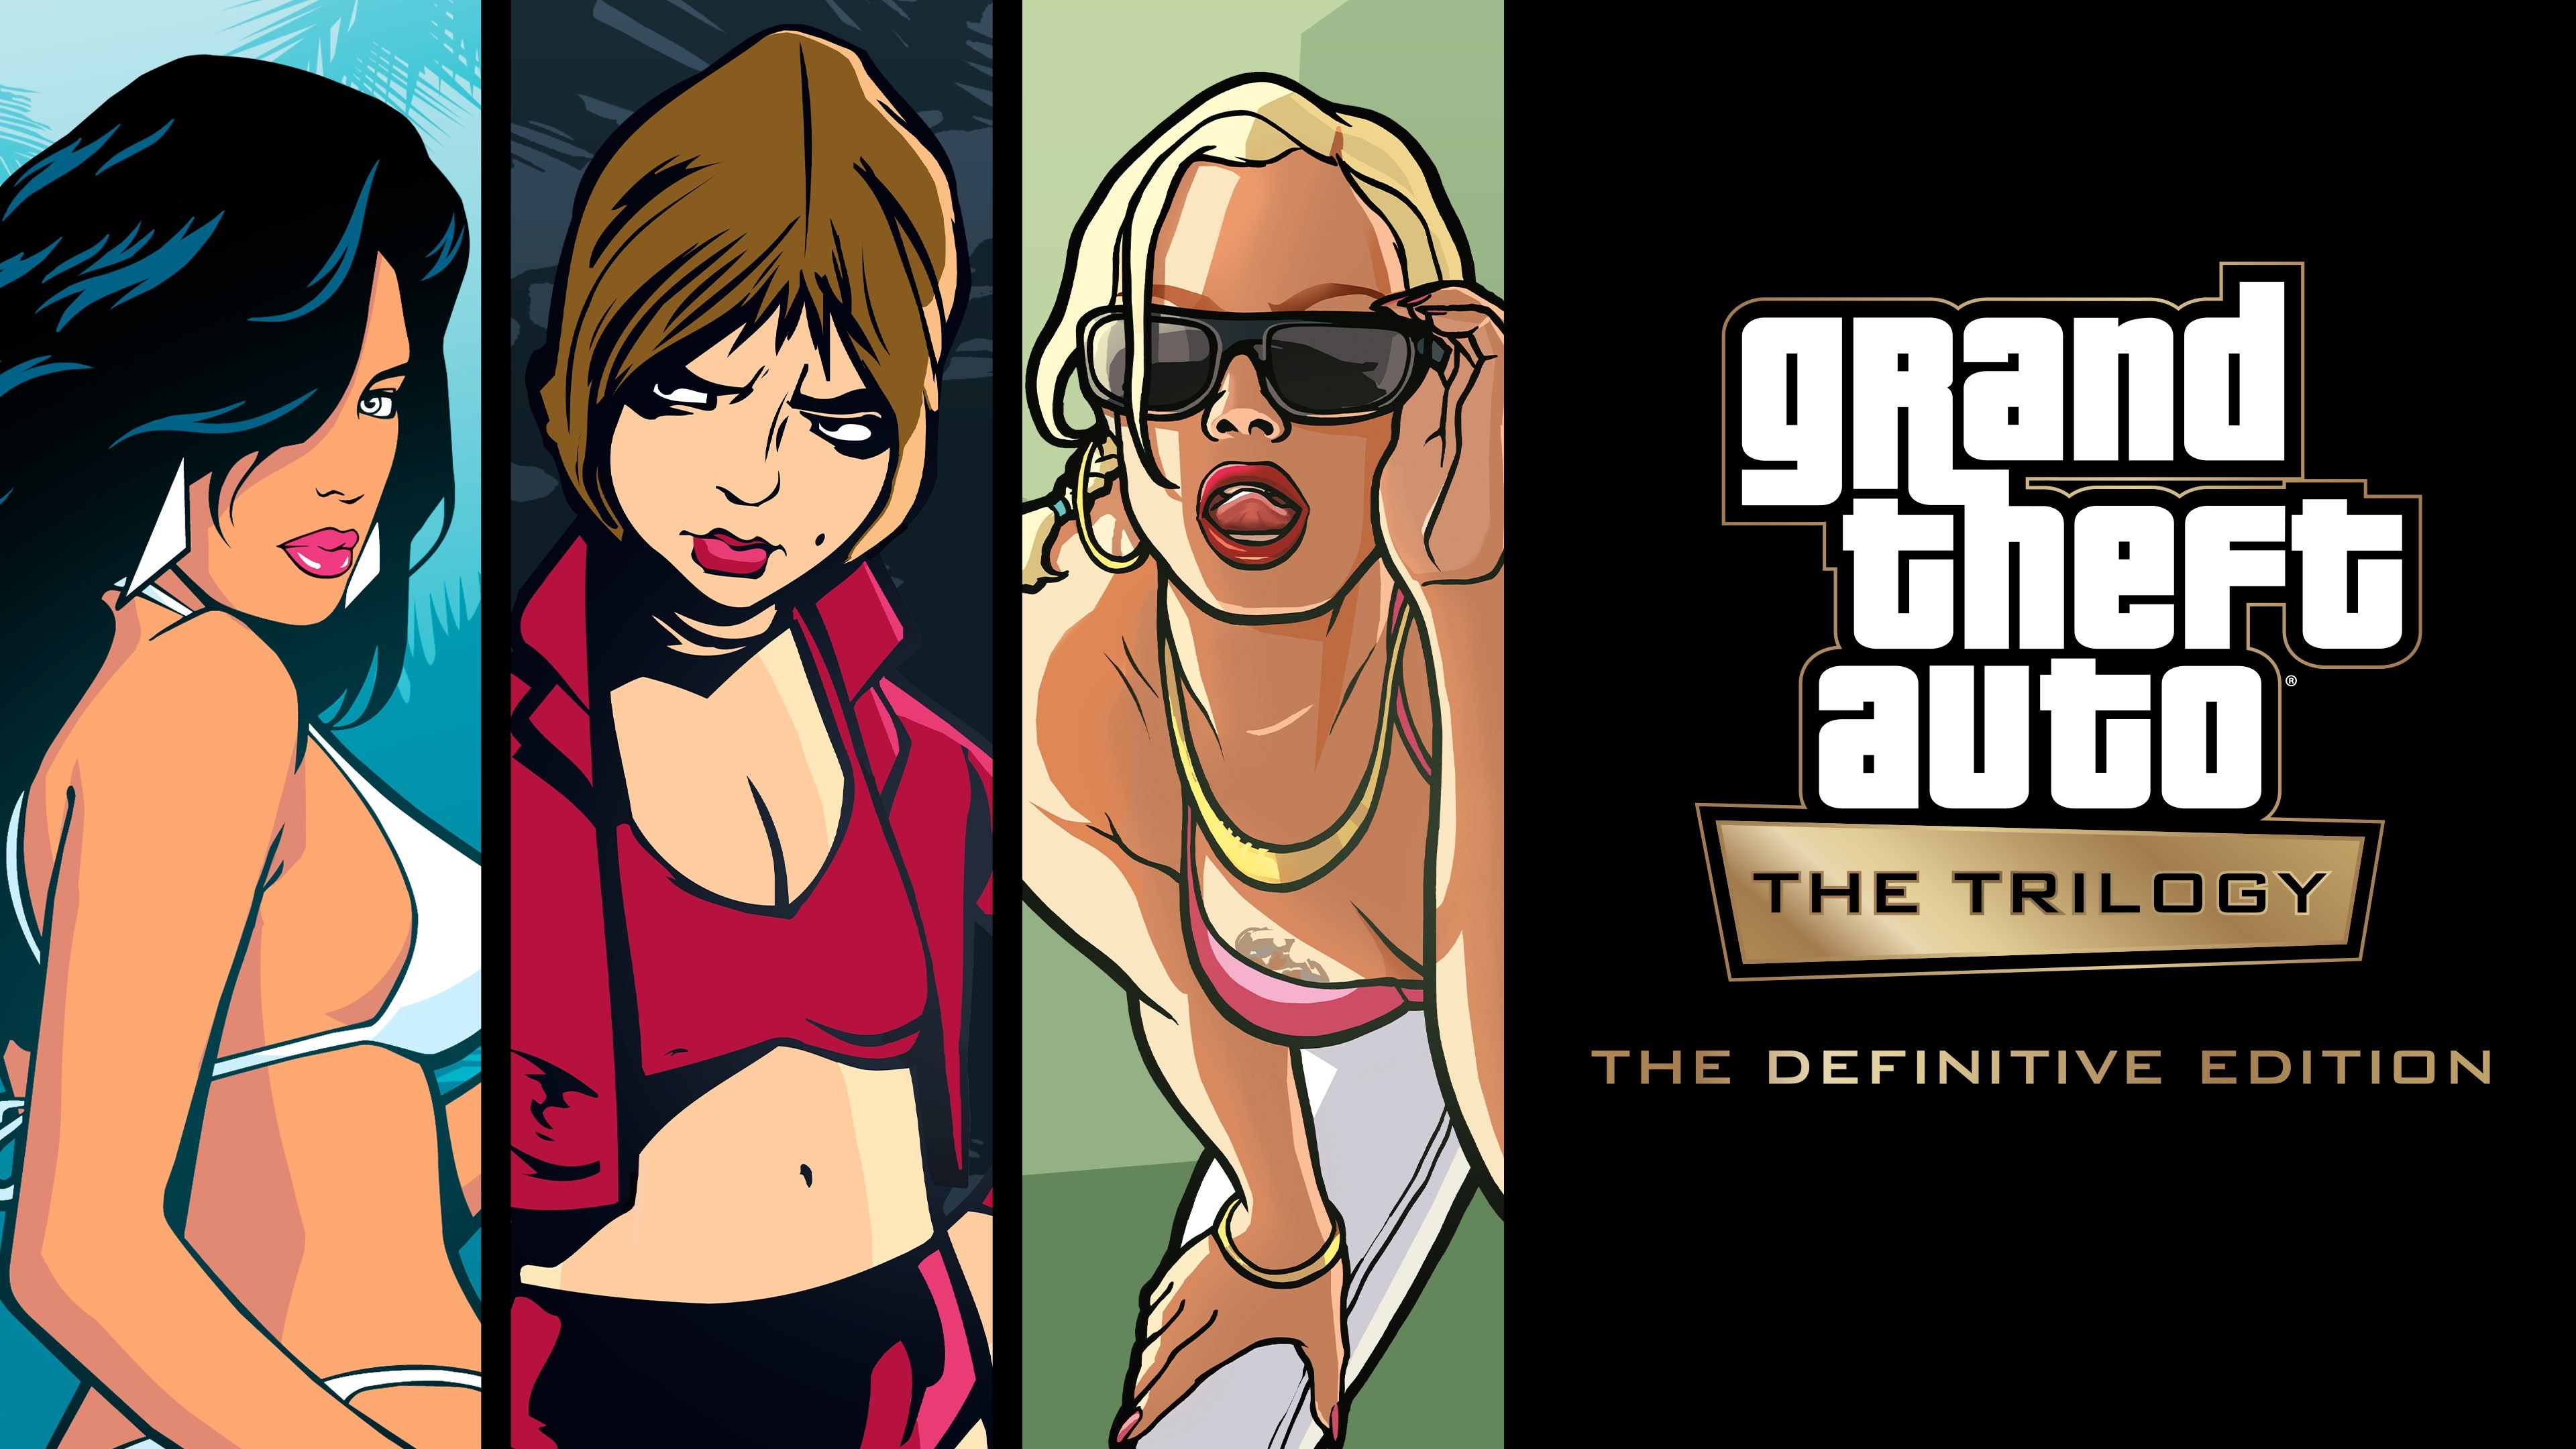 Gta San Andreas Grand Theft Auto Sa - Xbox One E Séries S/X